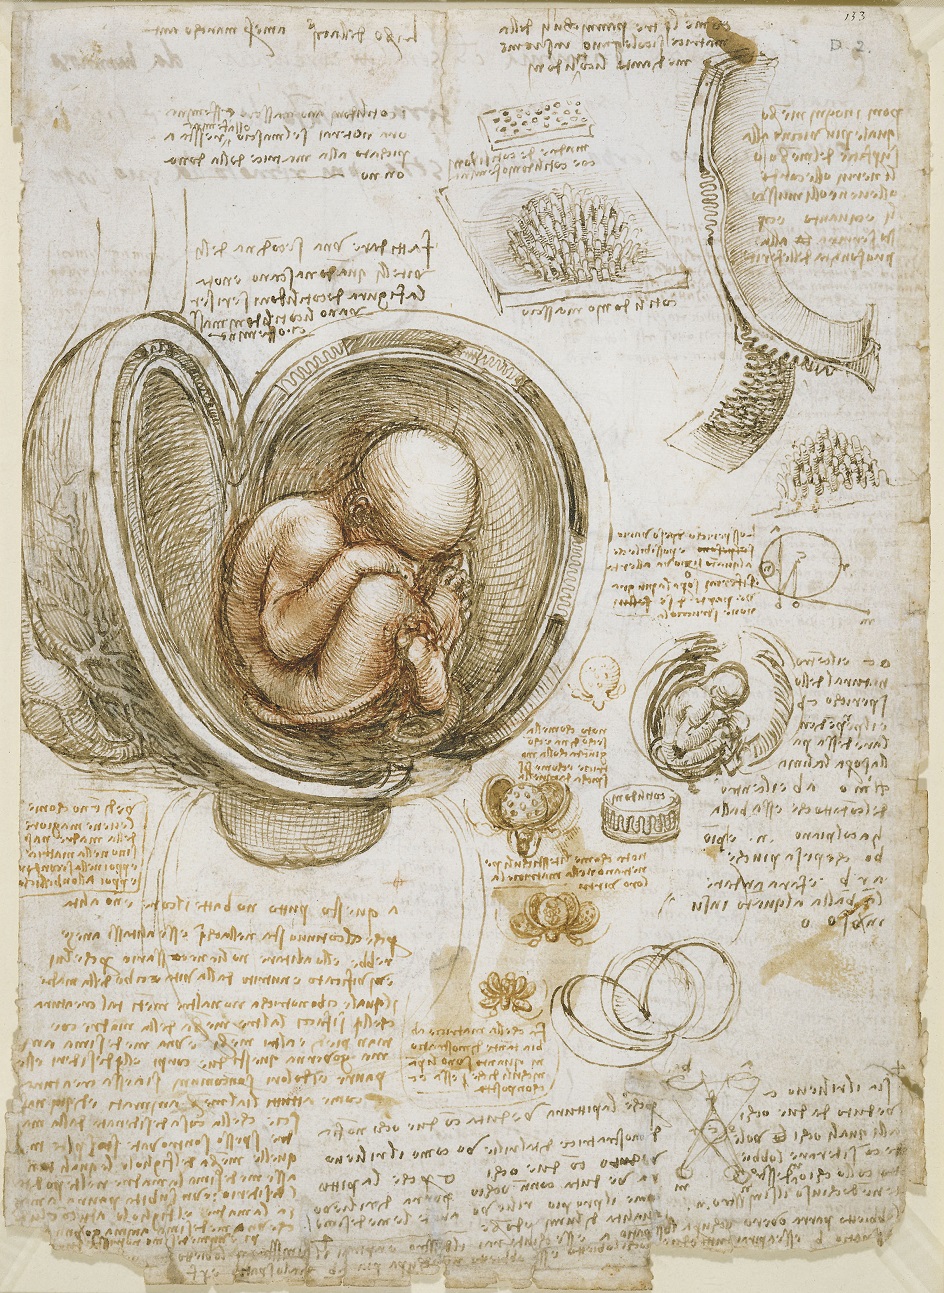 Леонардо да Винчи. Страница из дневника с записями и рисунками по анатомии. 1510